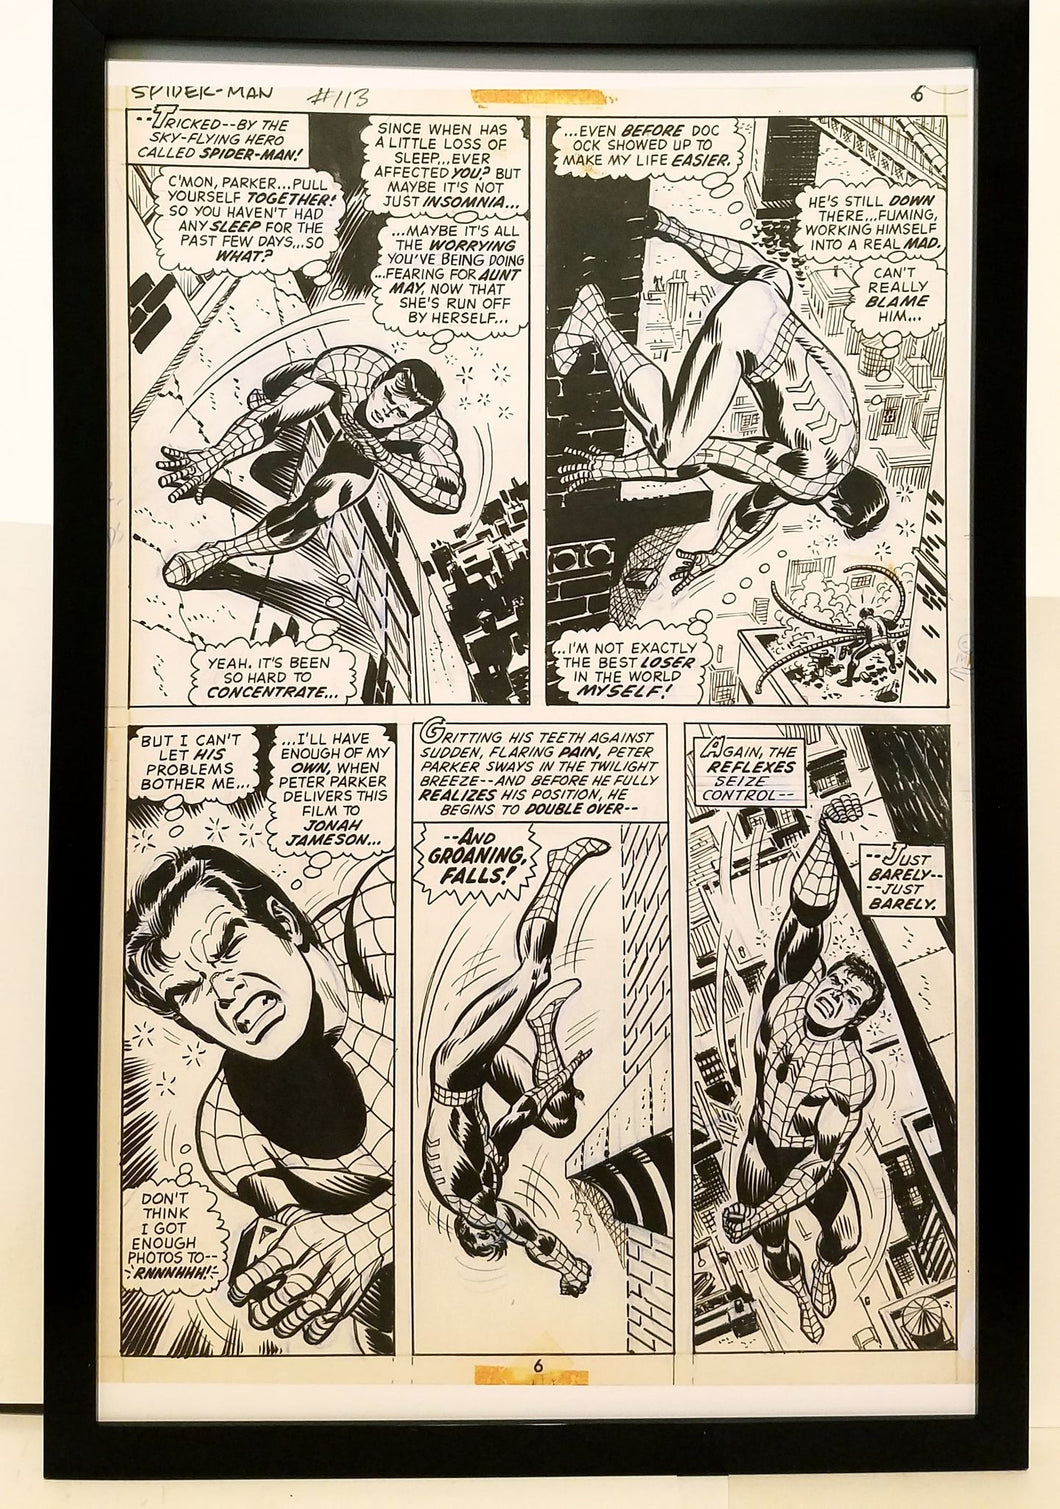 Amazing Spider-Man #113 pg. 6 11x17 FRAMED Original Art Poster Marvel Comics